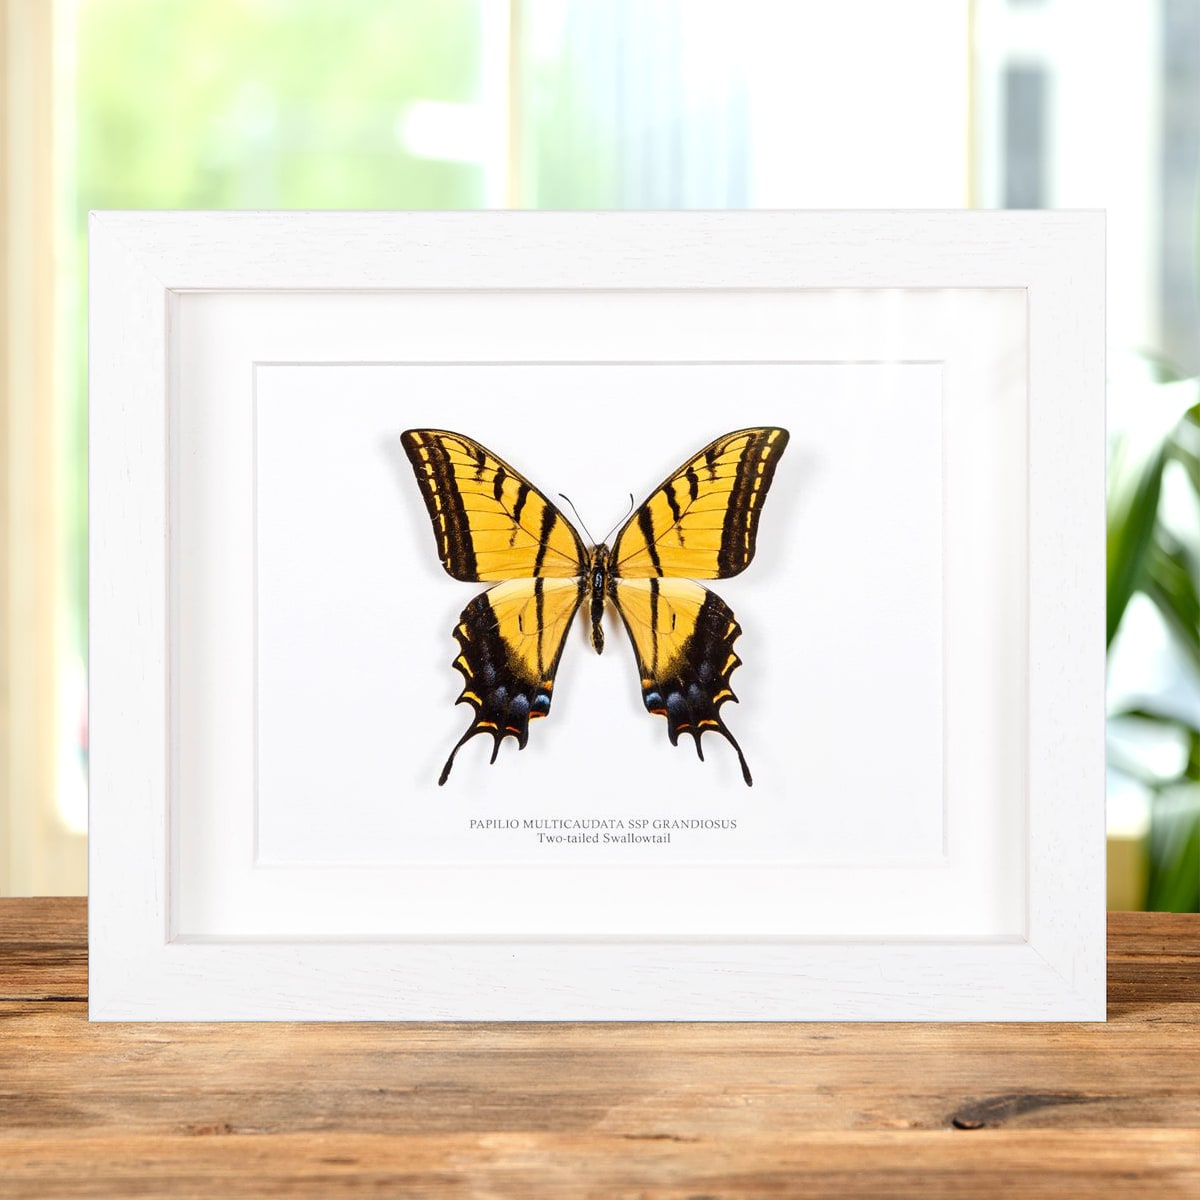 Two-tailed Swallowtail in Box Frame (Papilio multicaudata ssp grandiosus)